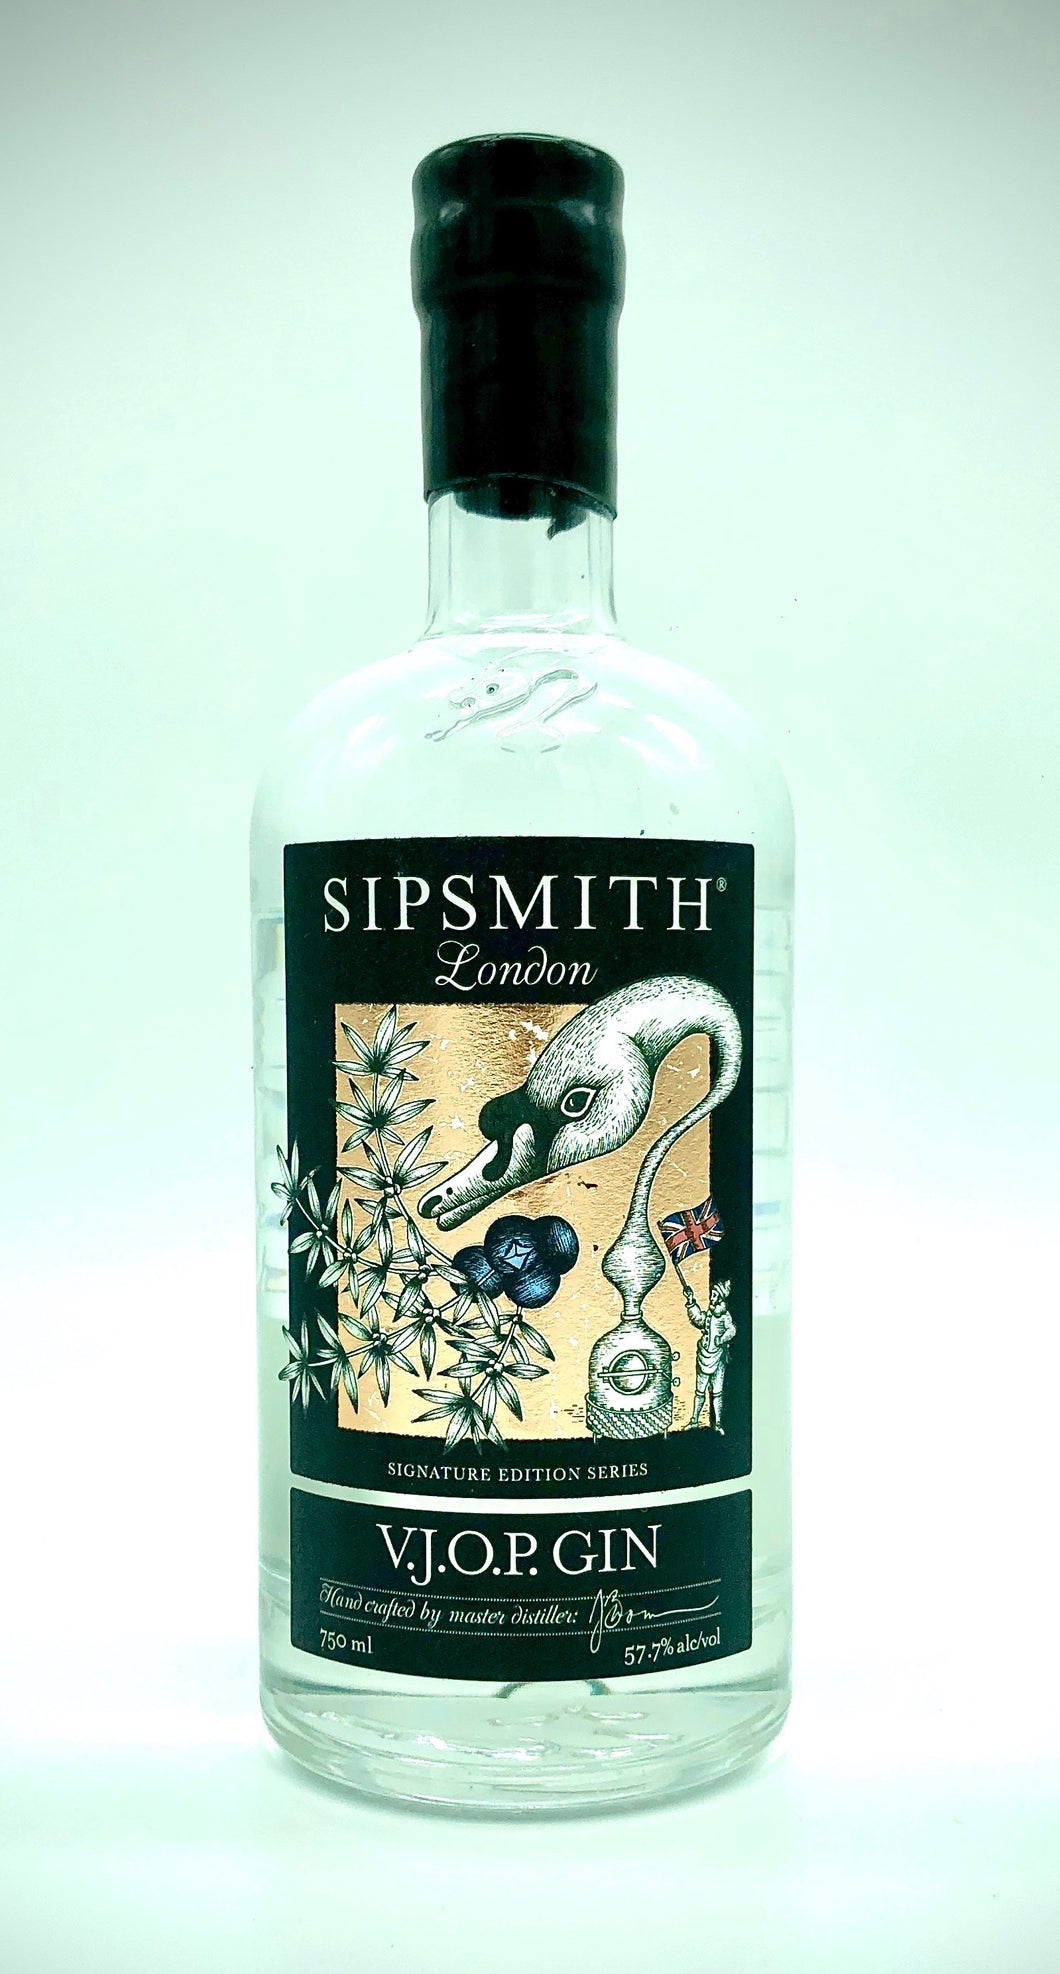 Sipsmith V.J.O.P Gin (750ml) Signature Edition